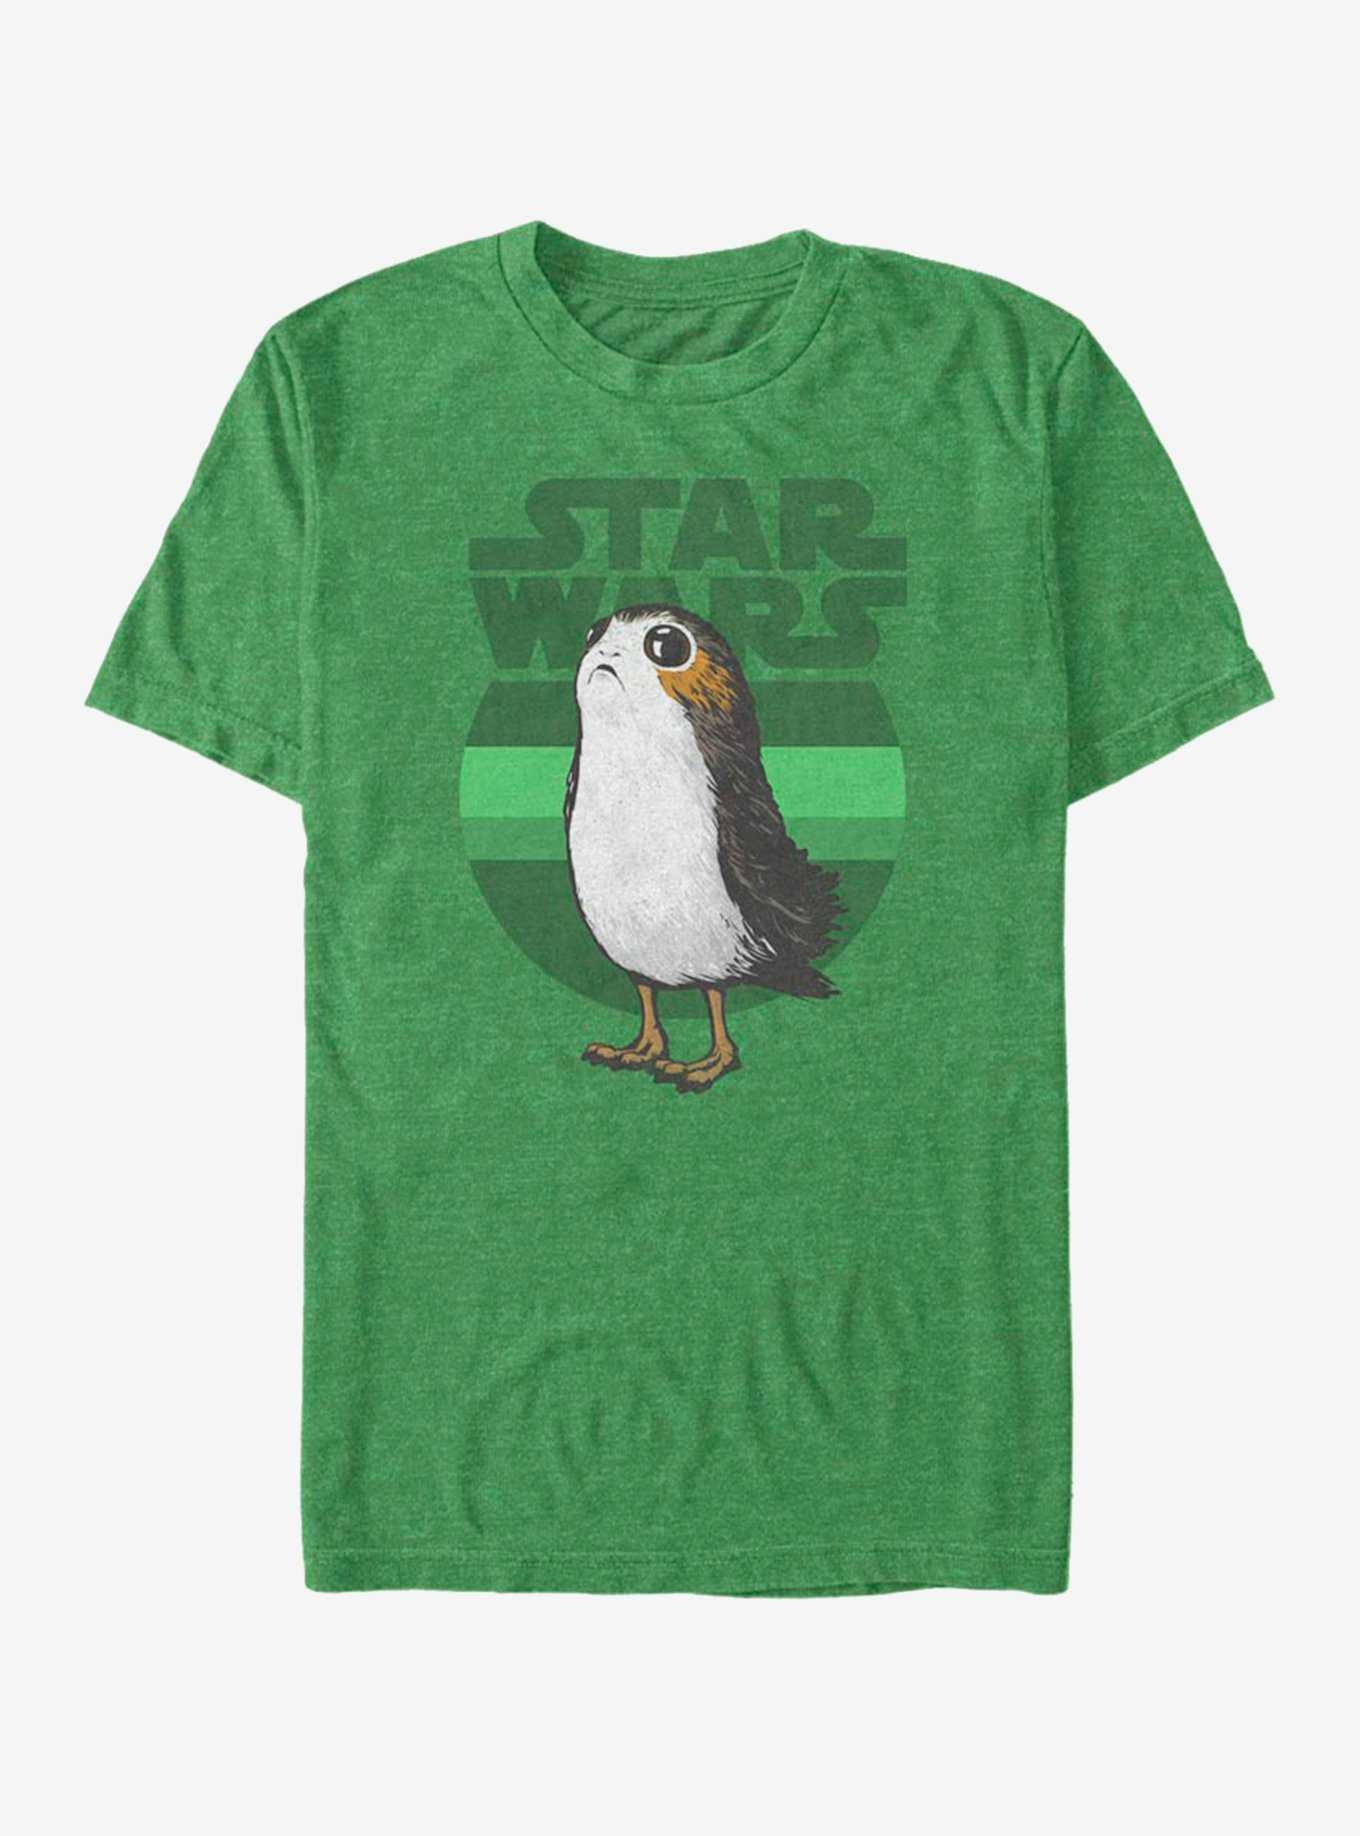 Star Wars Porg Simple Green T-Shirt, , hi-res